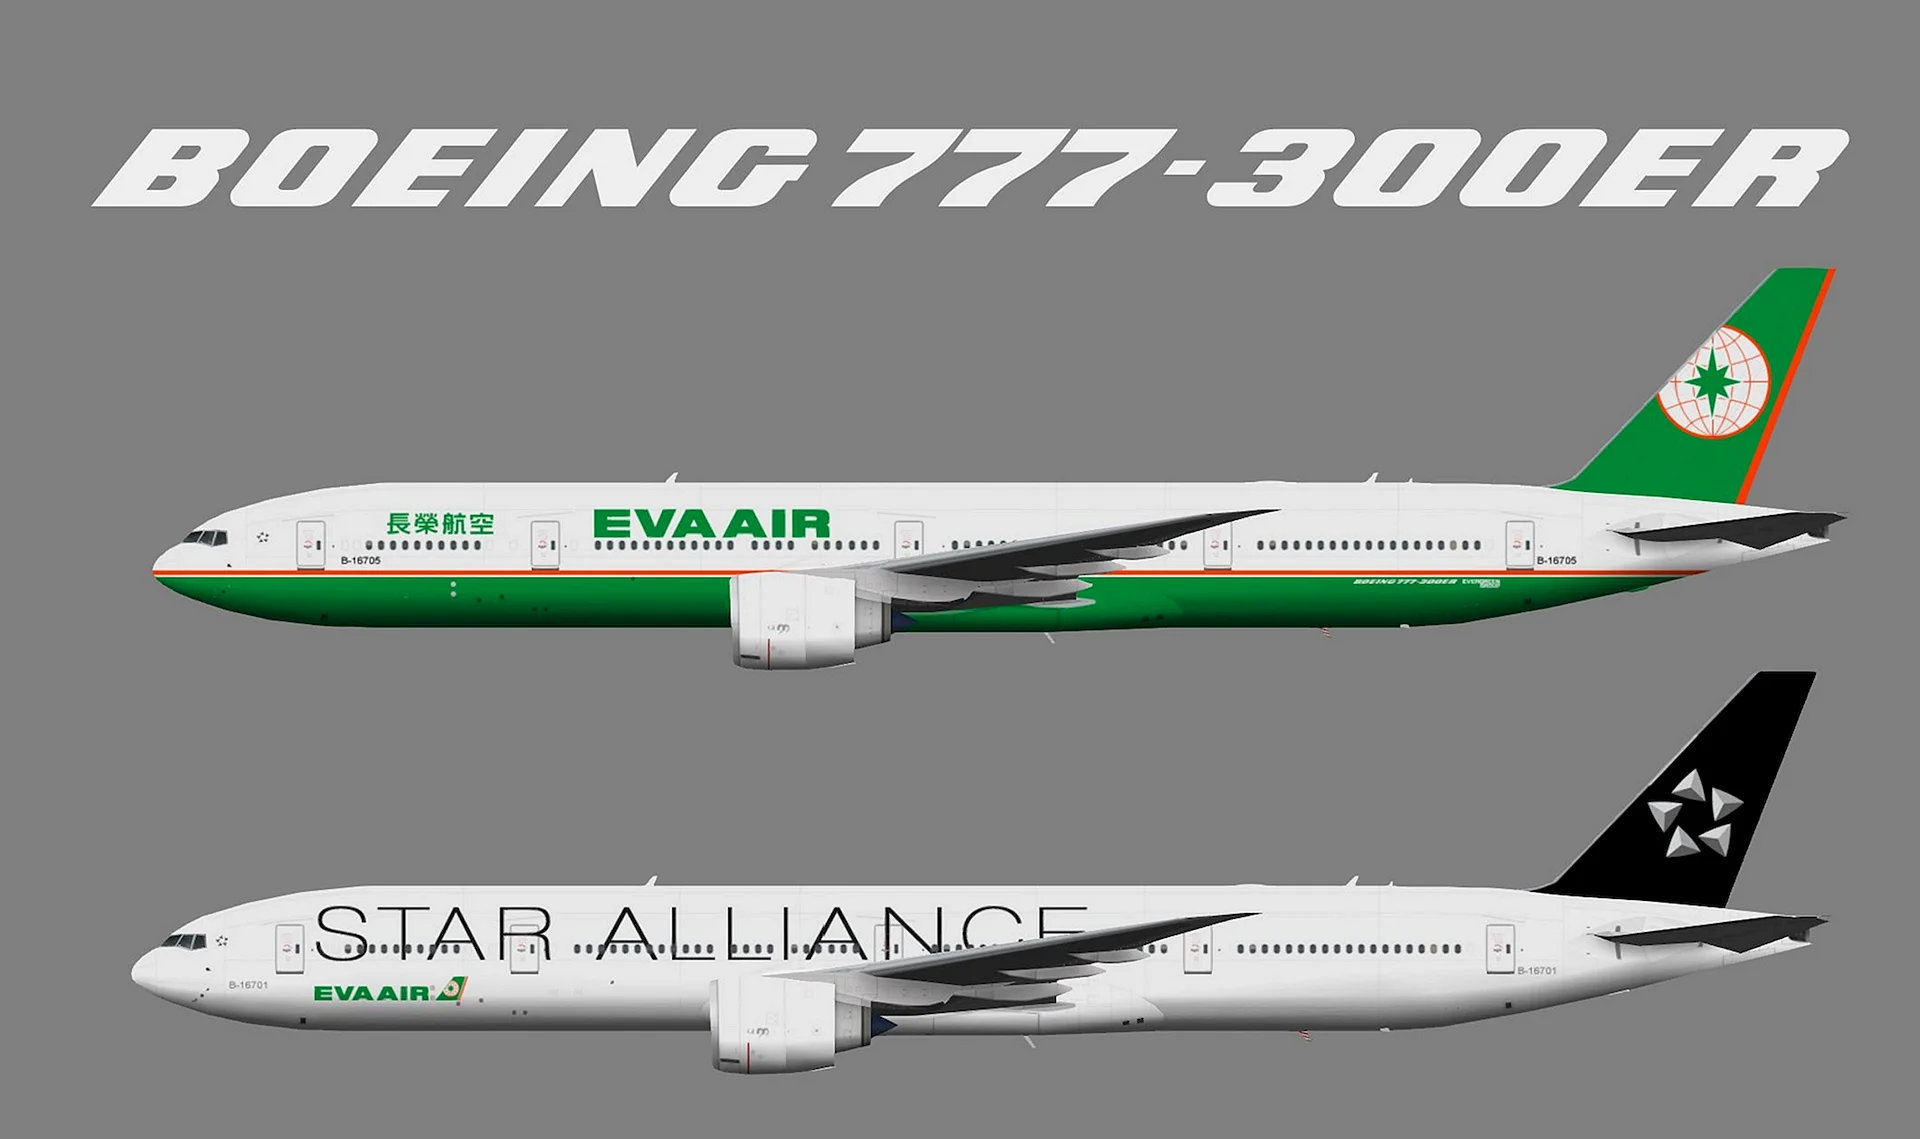 Boeing 777 logo Wallpaper – Wallpapers High Resolution